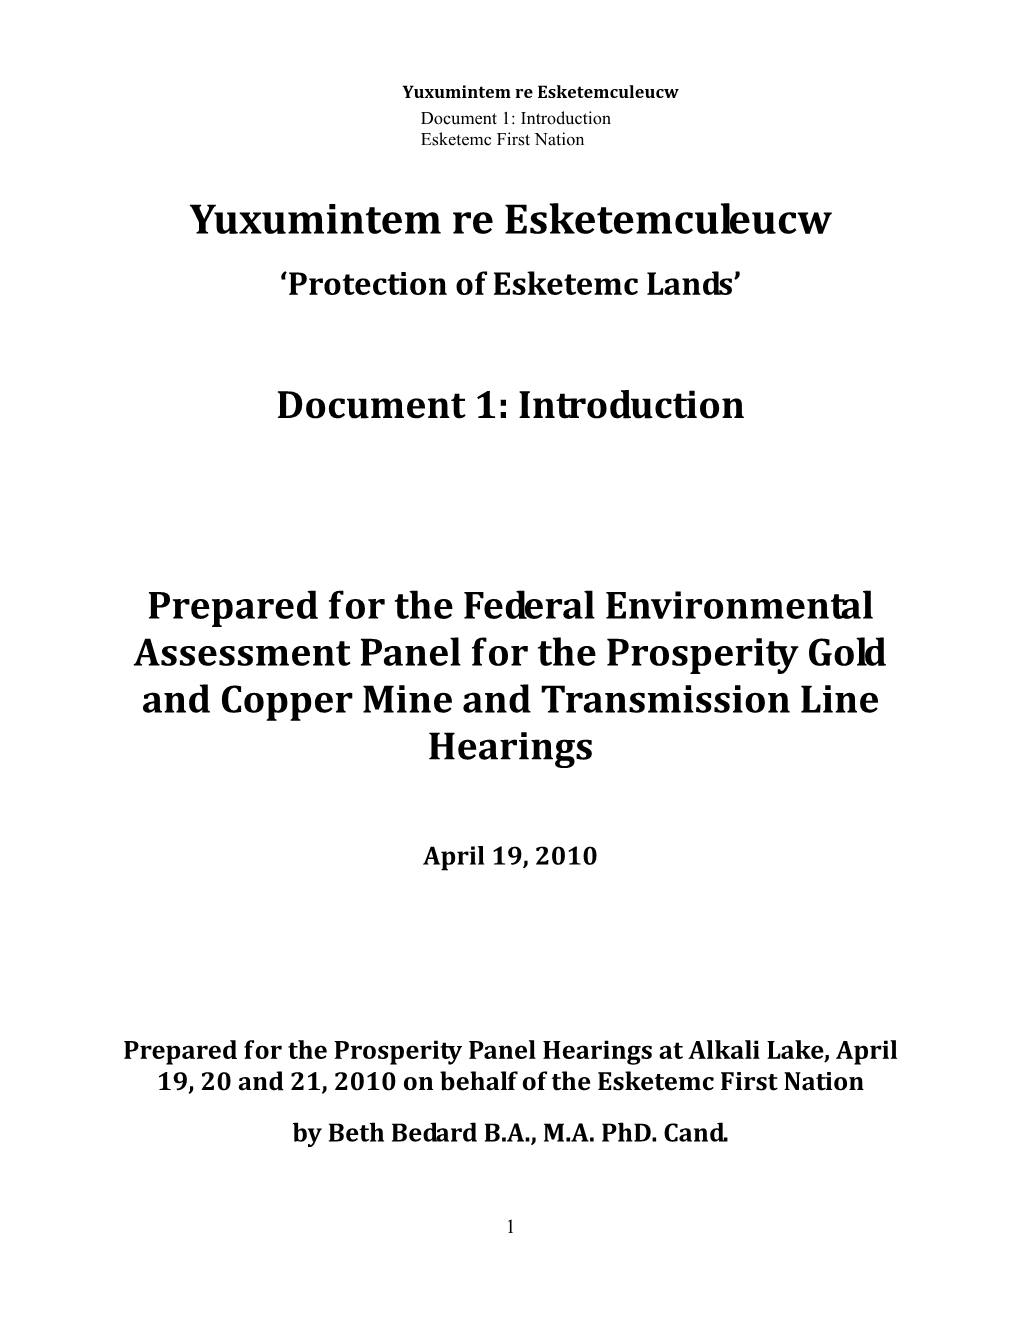 Yuxumintem Re Esketemculeucw Document 1: Introduction Esketemc First Nation